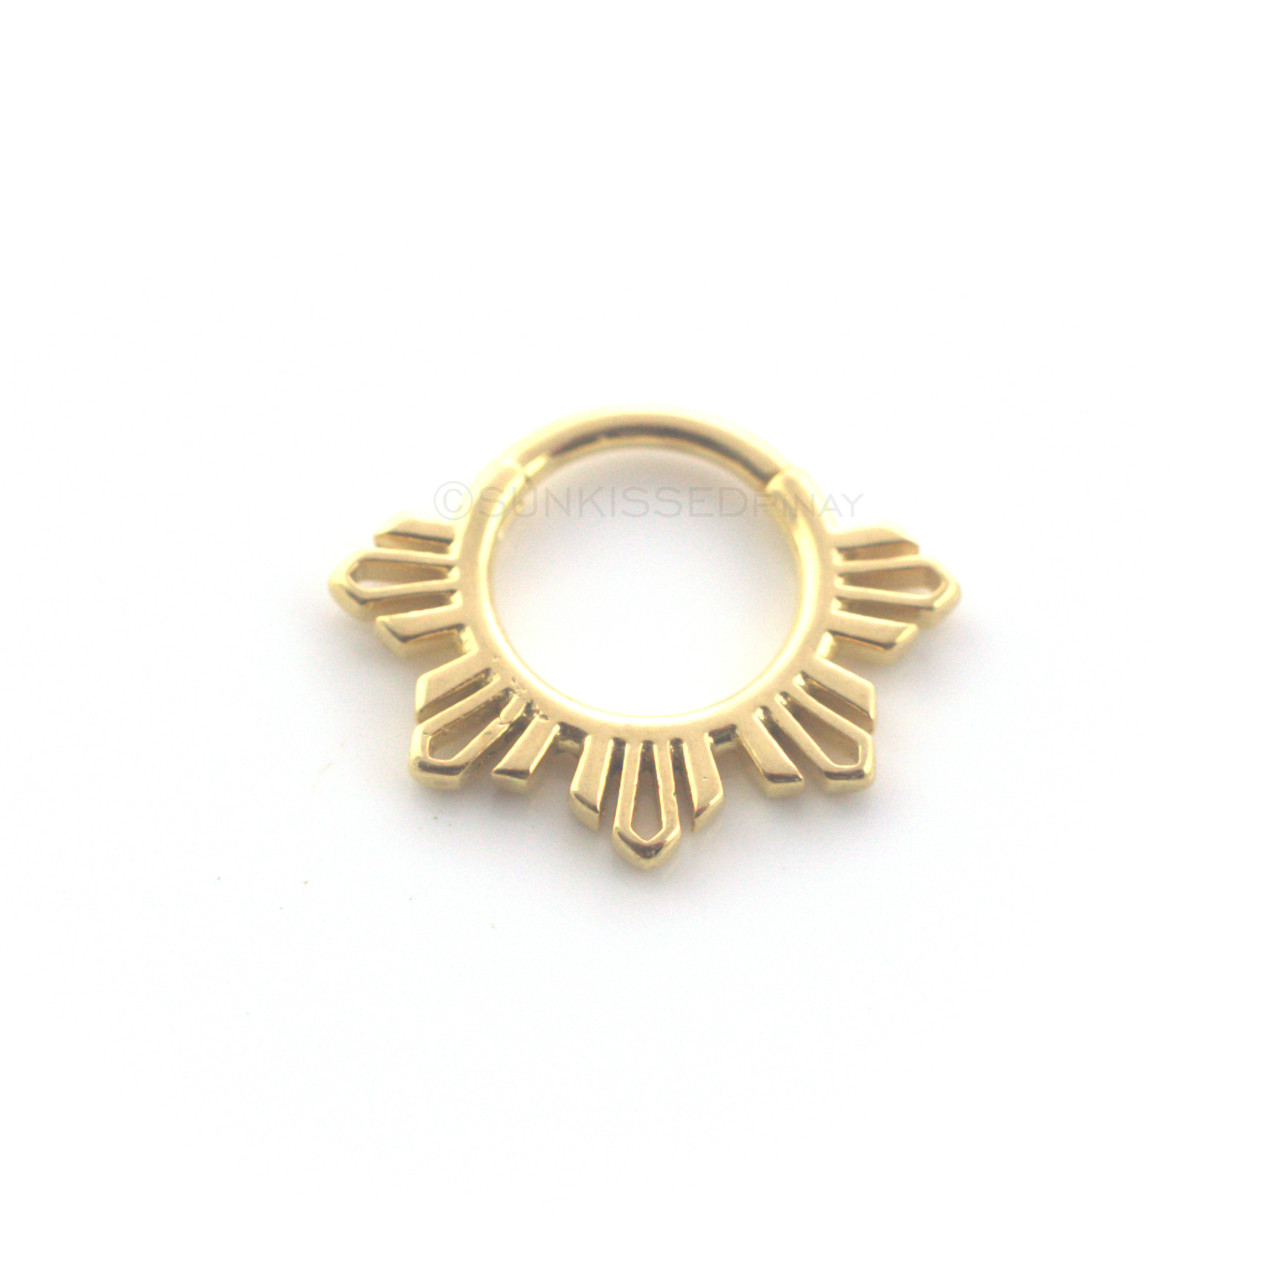 Araw Gold septum jewelry